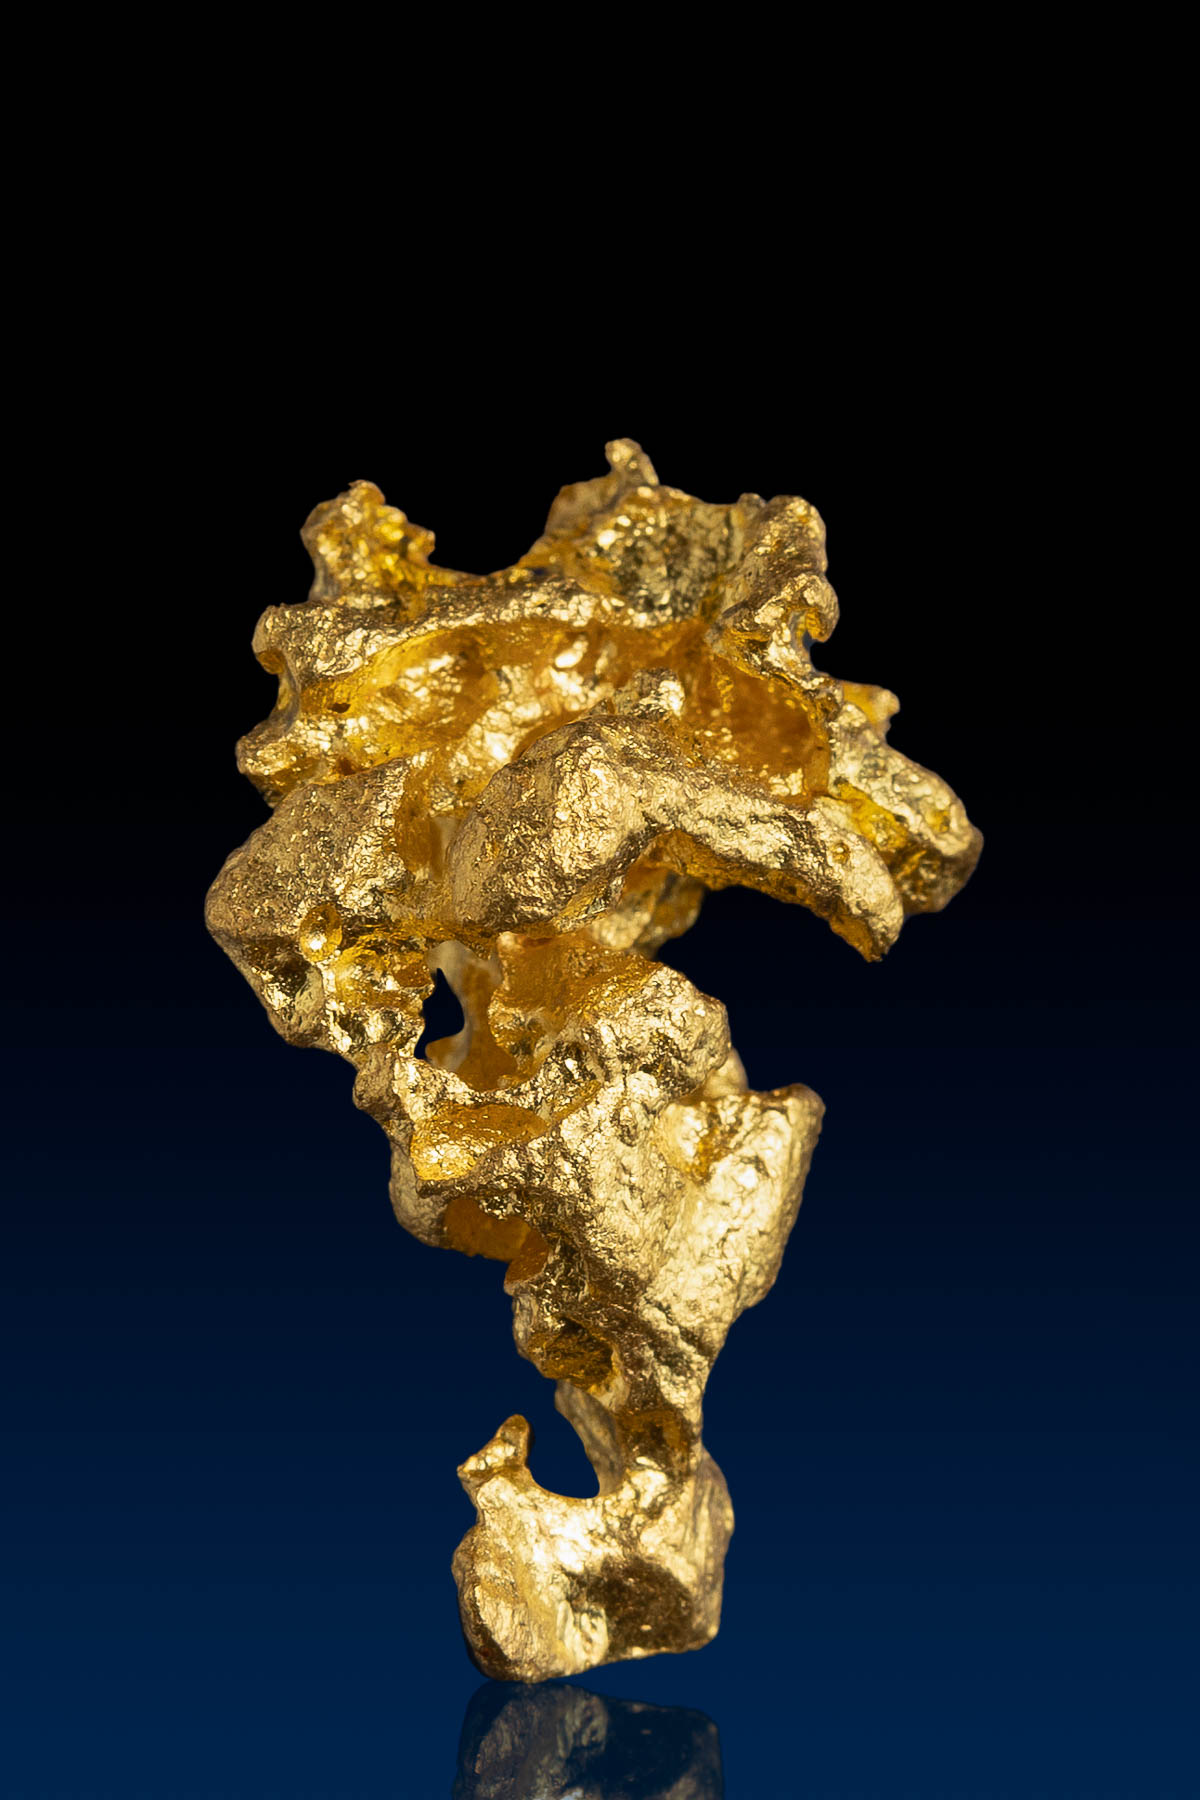 Sea Horse Australian Natural Gold Nugget - 4.94 grams